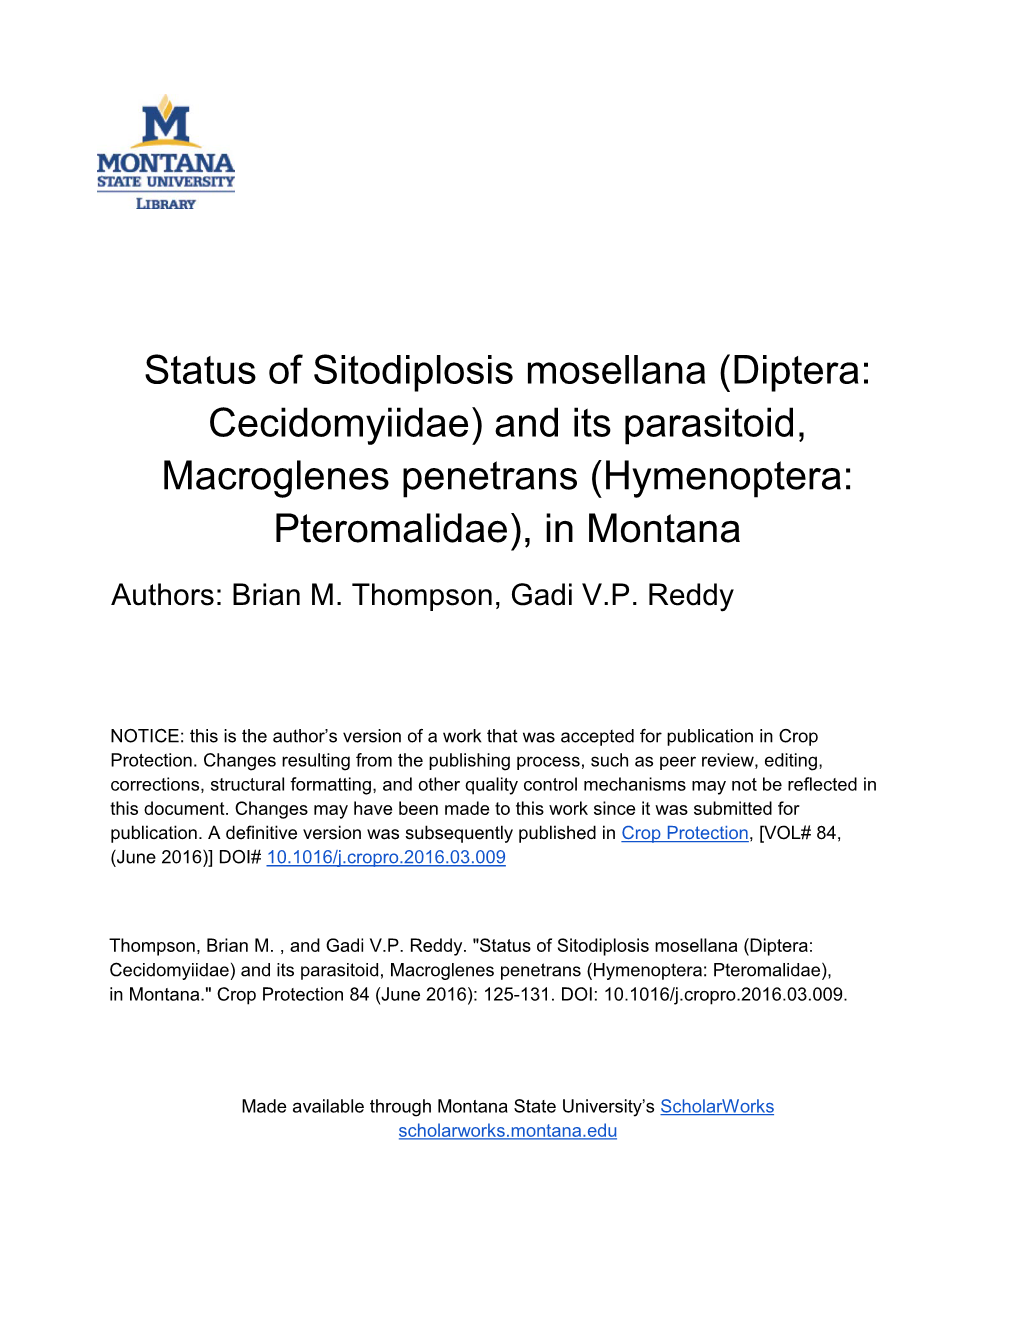 Status of Sitodiplosis Mosellana (Diptera: Cecidomyiidae) and Its Parasitoid, Macroglenes Penetrans (Hymenoptera: Pteromalidae), in Montana Authors: Brian M